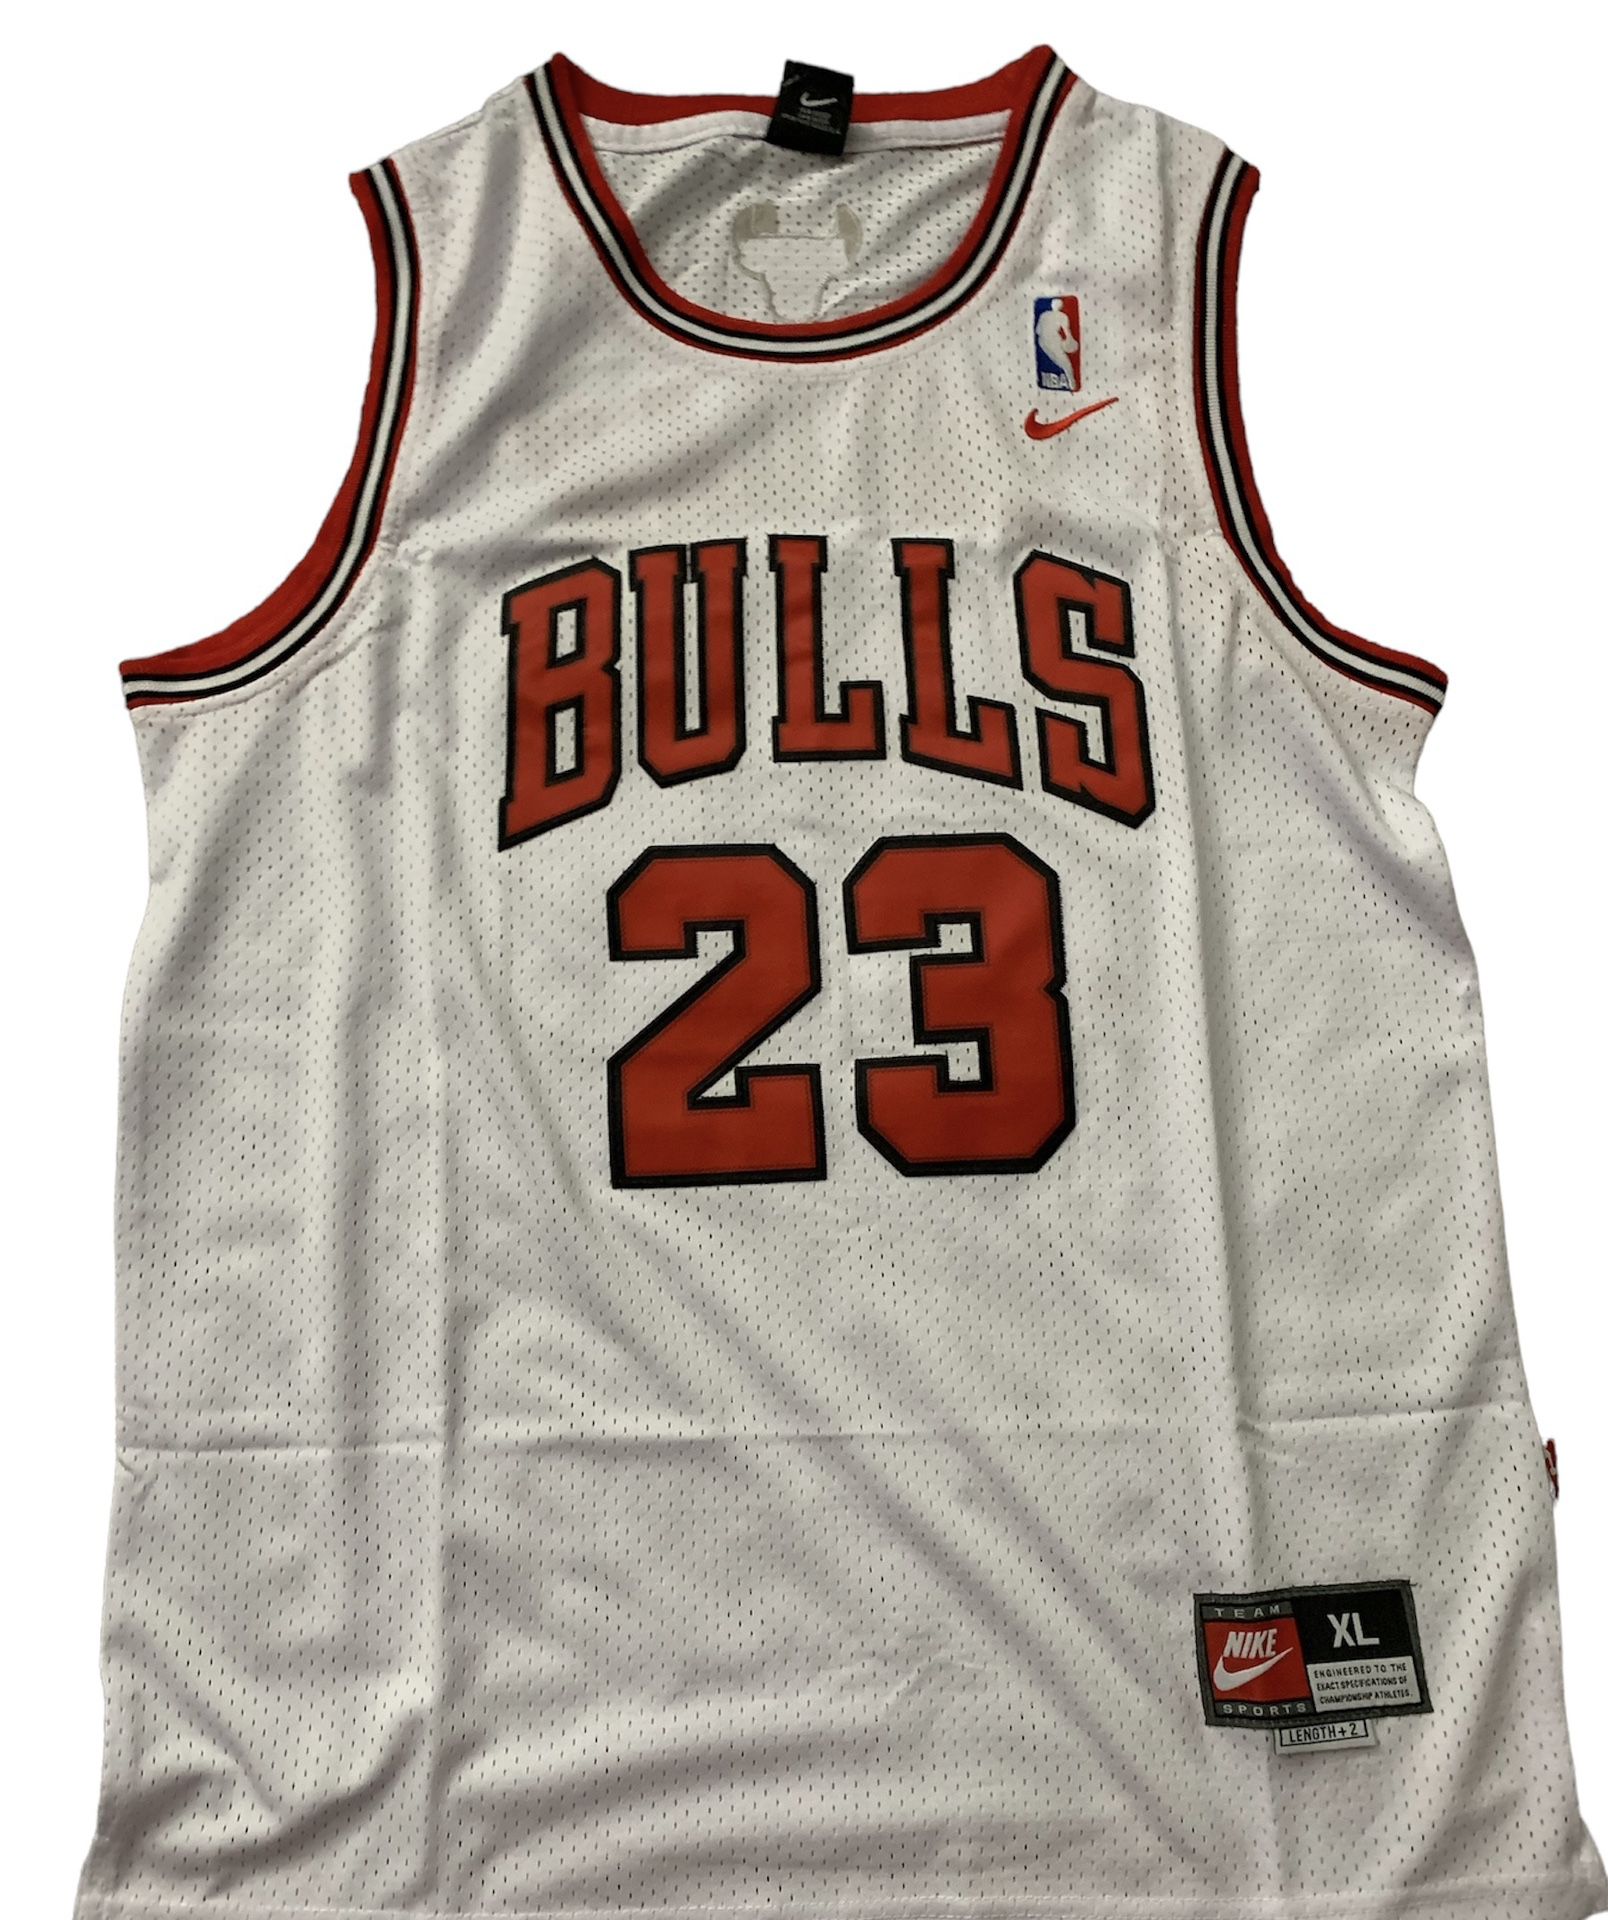 New Stitched Michael Jordan White Jersey Size xL